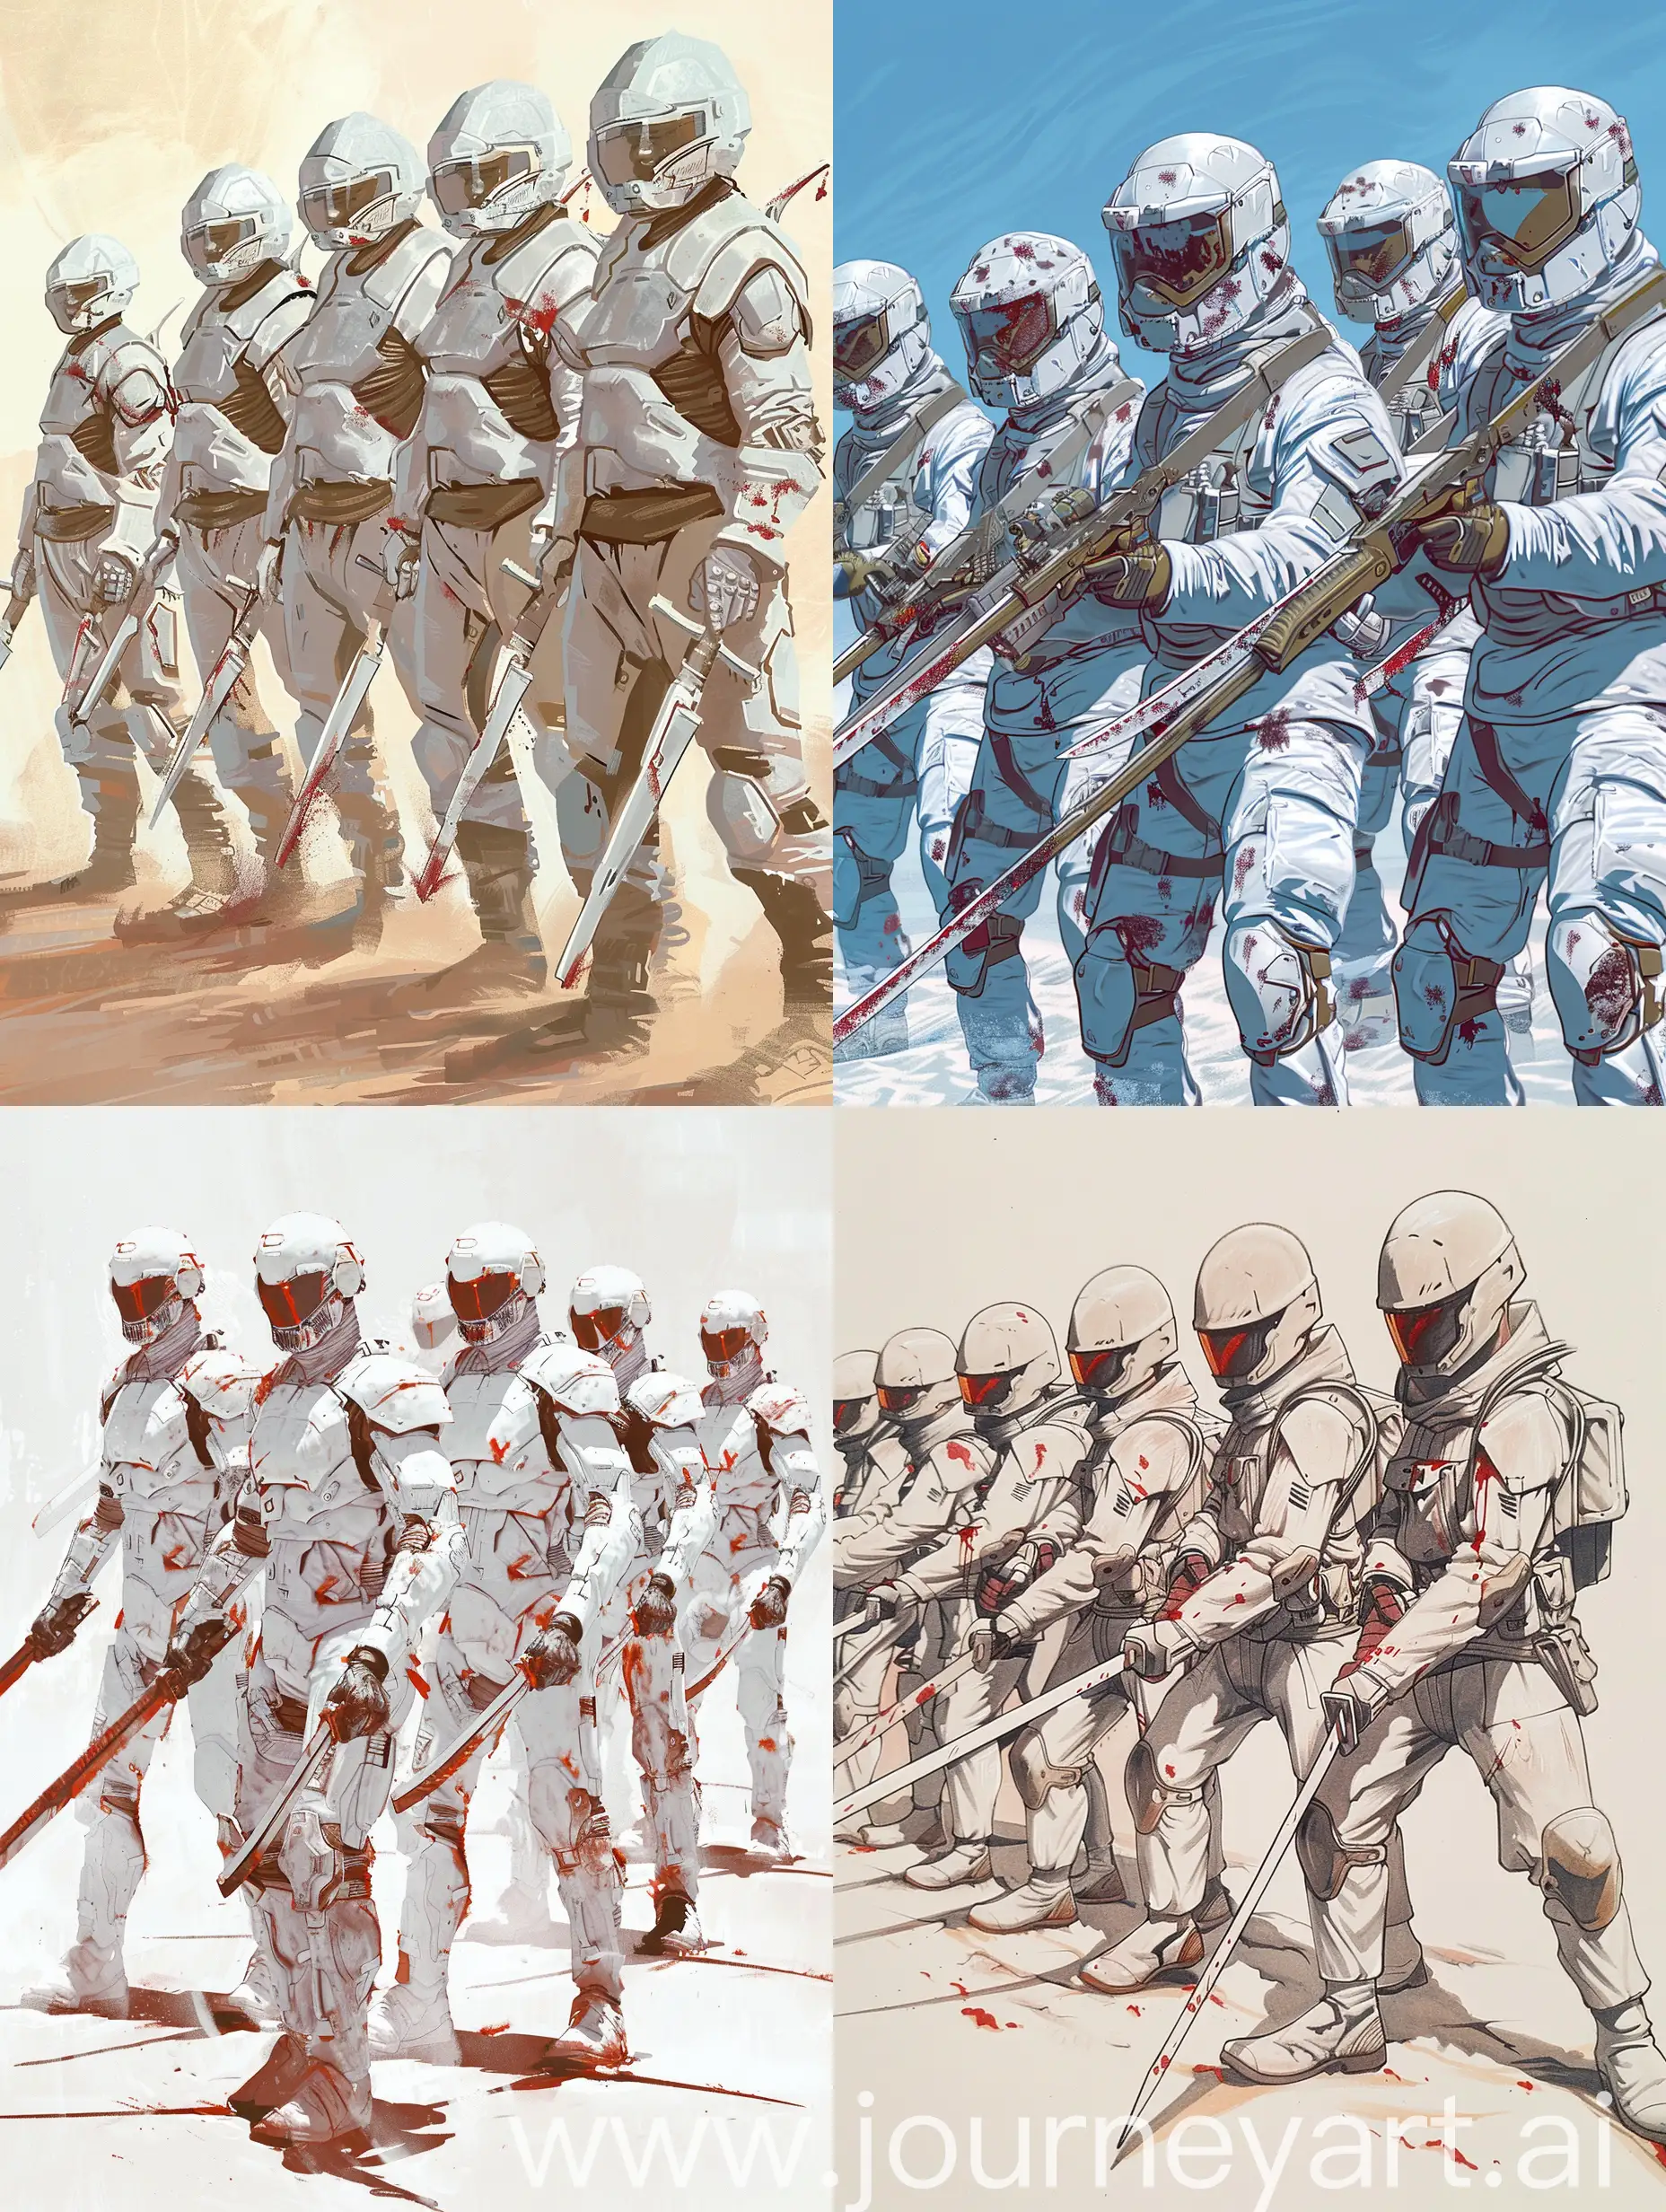 Futuristic-Sardaukar-Soldiers-Wielding-Katana-Swords-Amidst-Battle